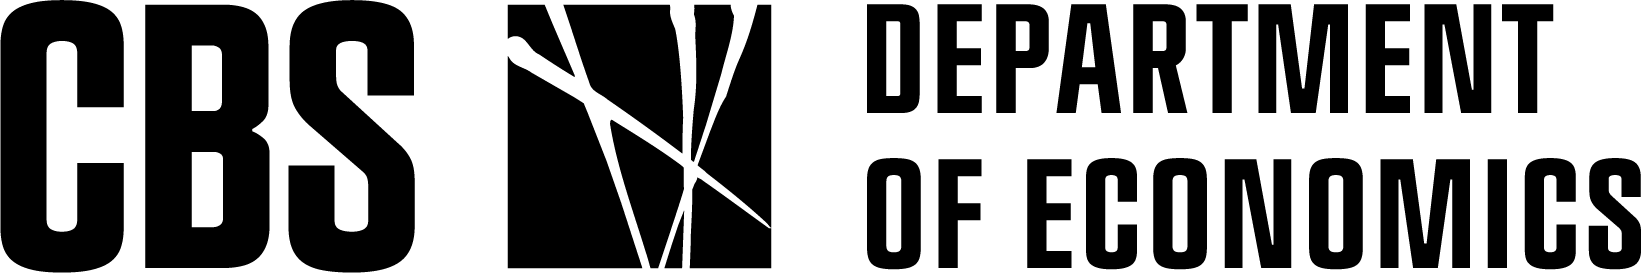 CBS logo